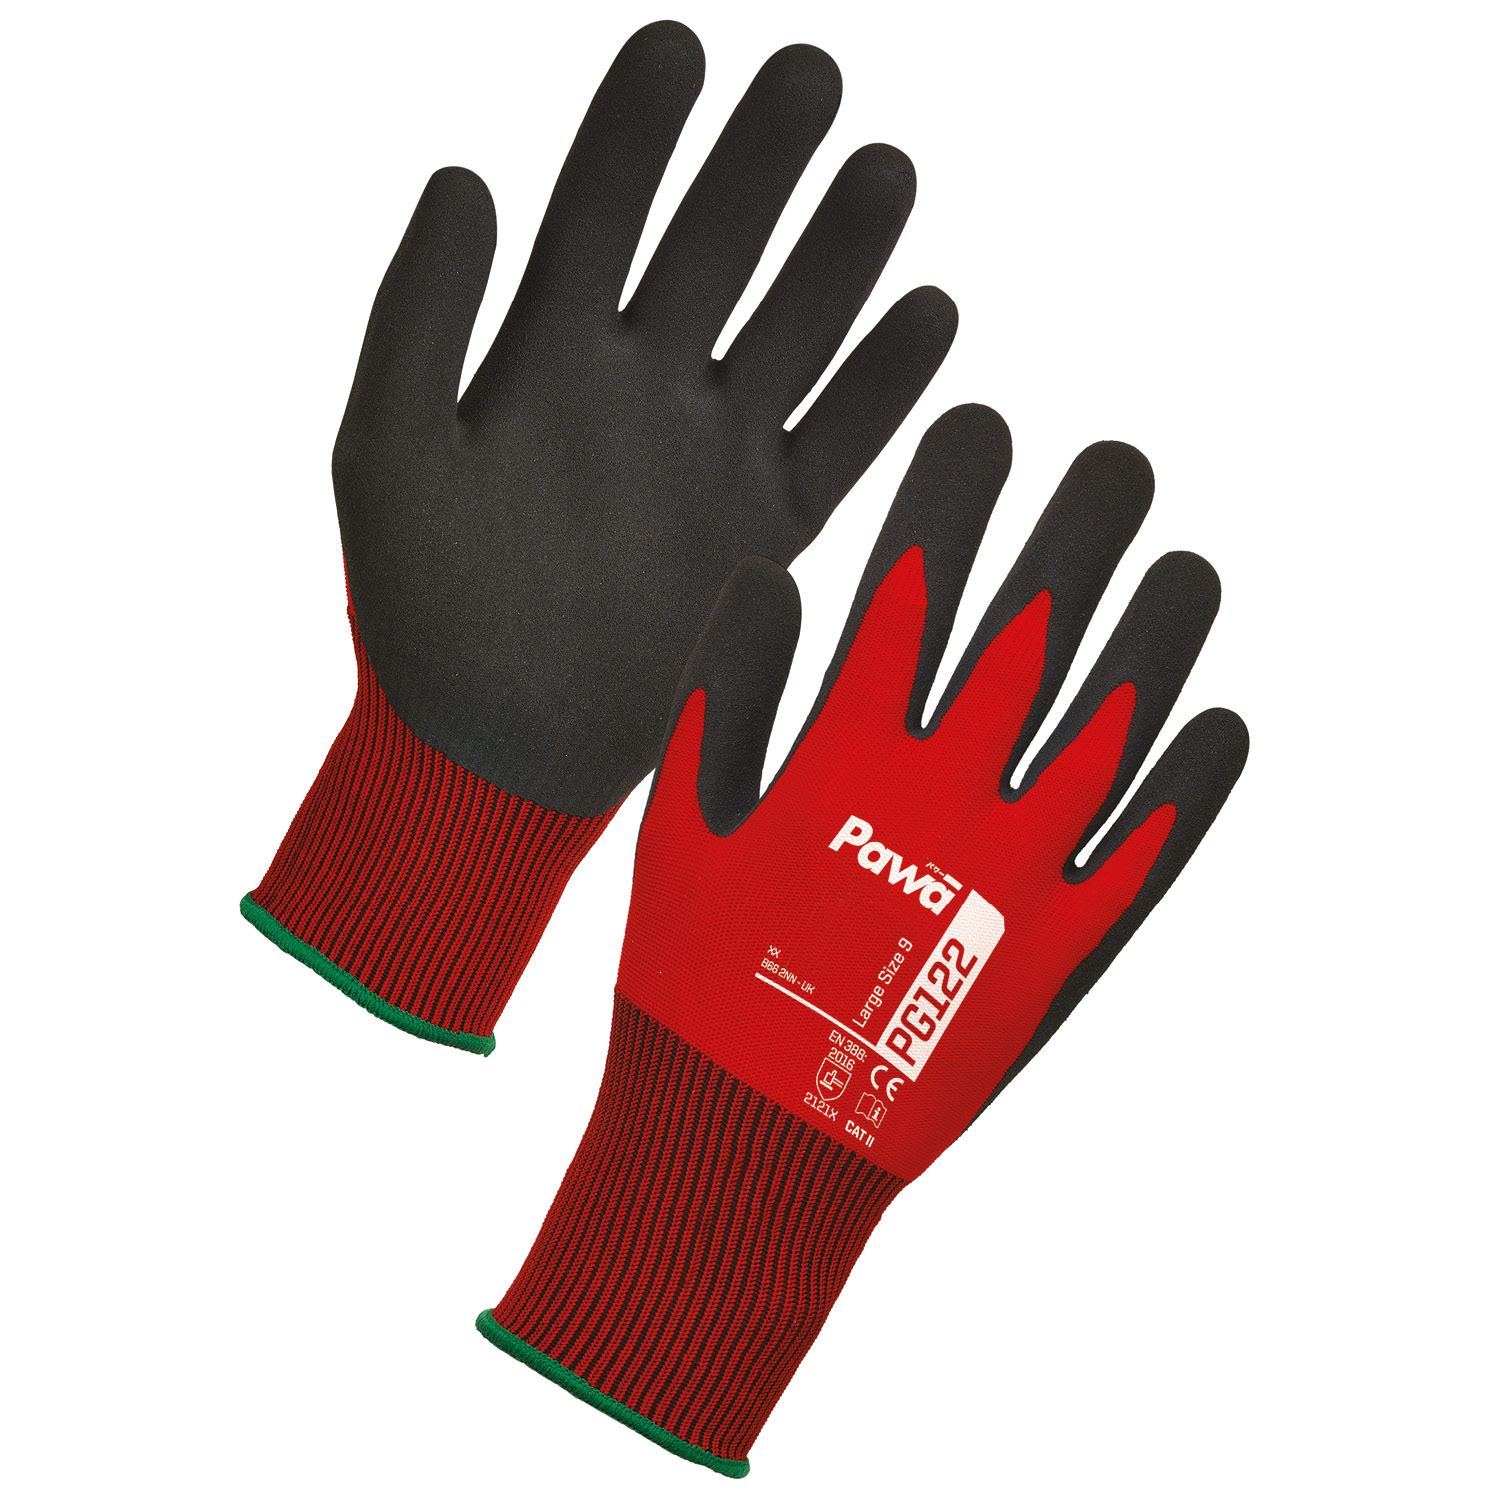 Pawa Gloves 122 - Medium